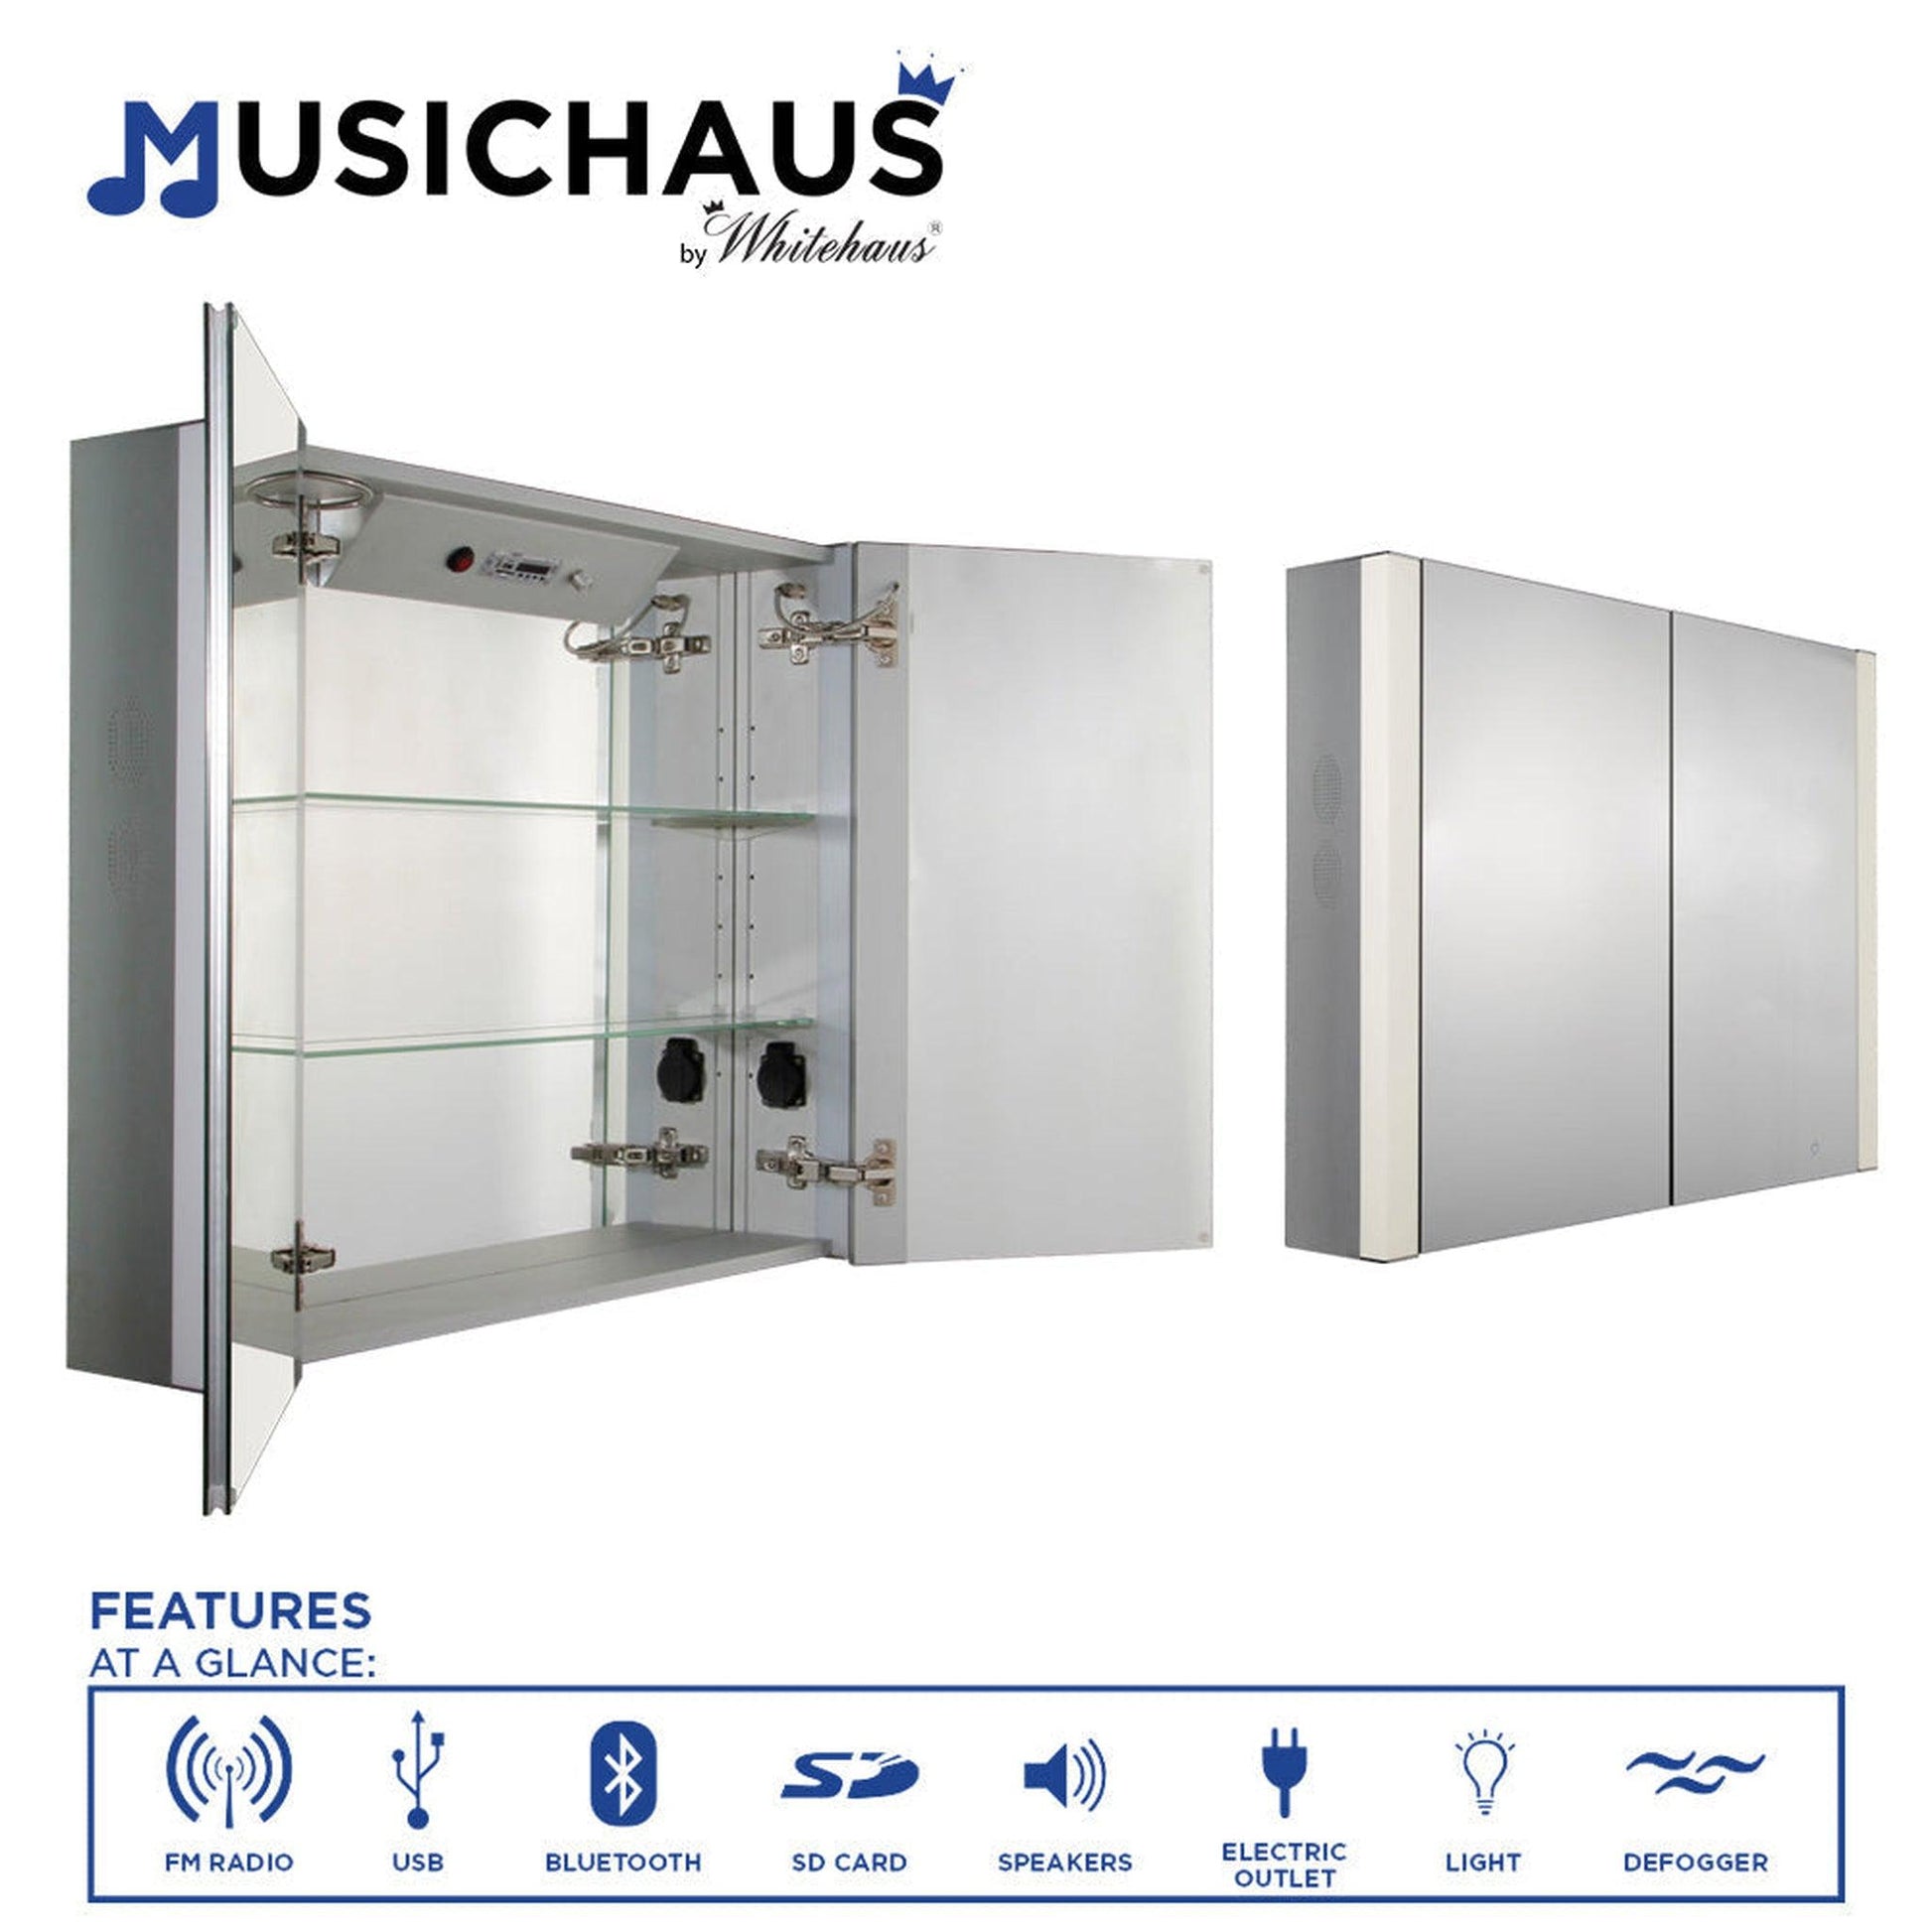 Whitehaus Musichaus WHFEL7089-S Double Mirrored Door Medicine Cabinet With USB, SD Card, Bluetooth, FM Radio, Speakers, Defogger & Dimmer